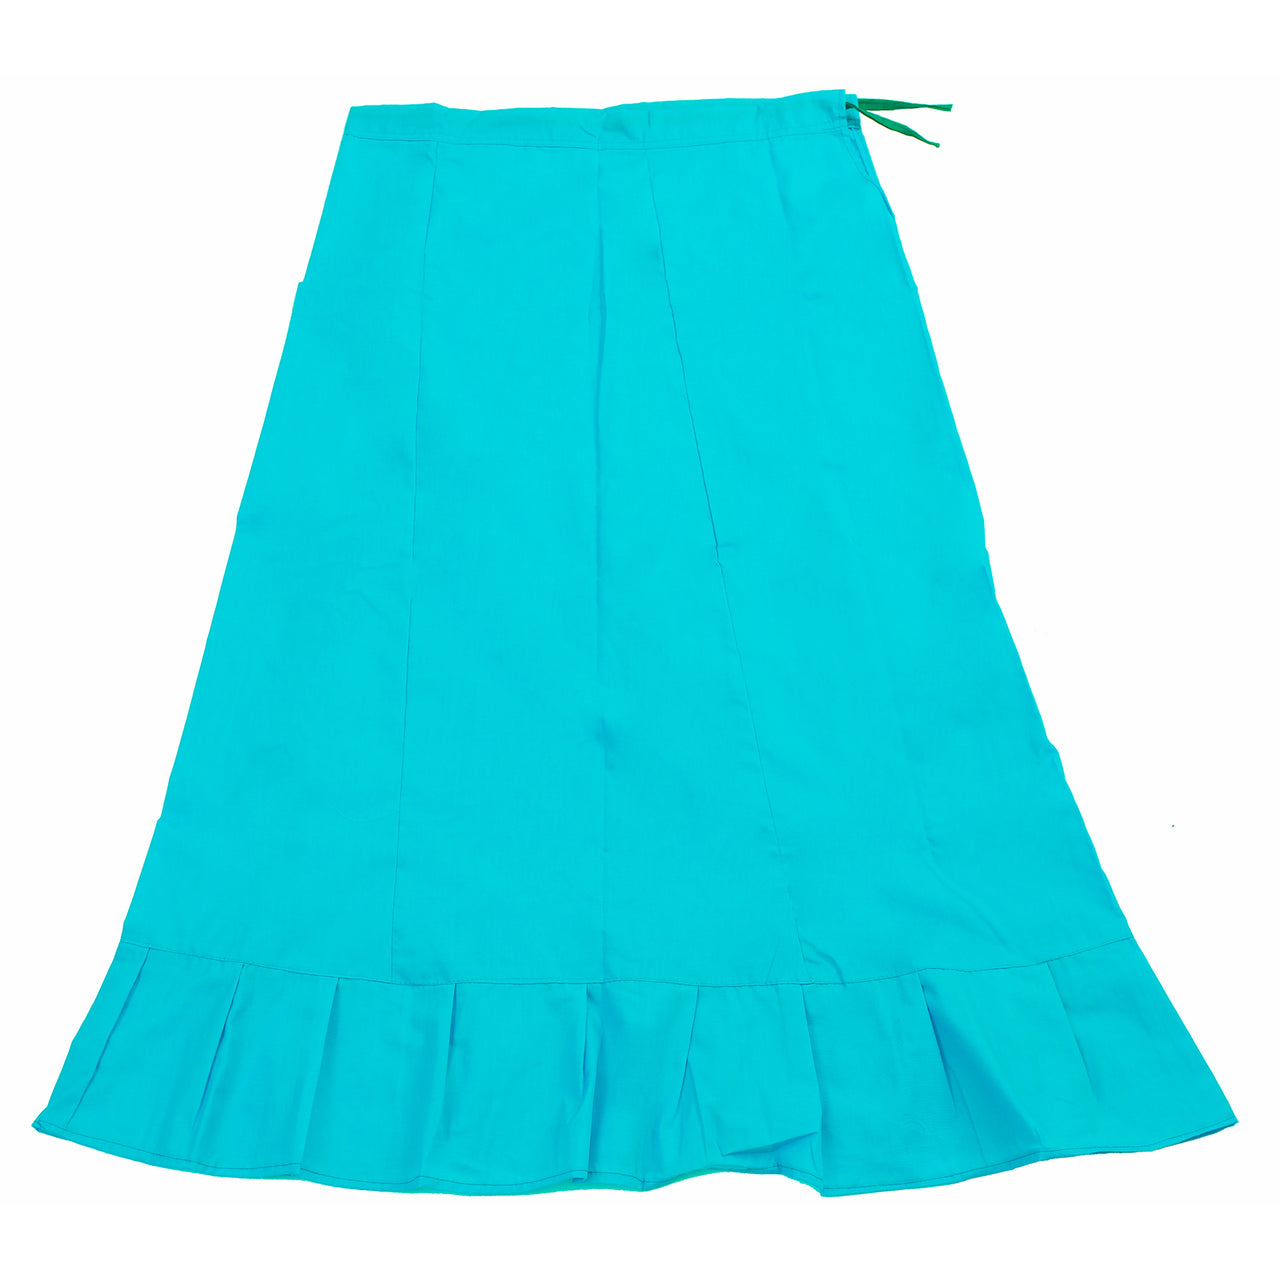 Blue - Sari (Saree) Petticoat - Available in S, M, L & XL - Underskirts For Sari's